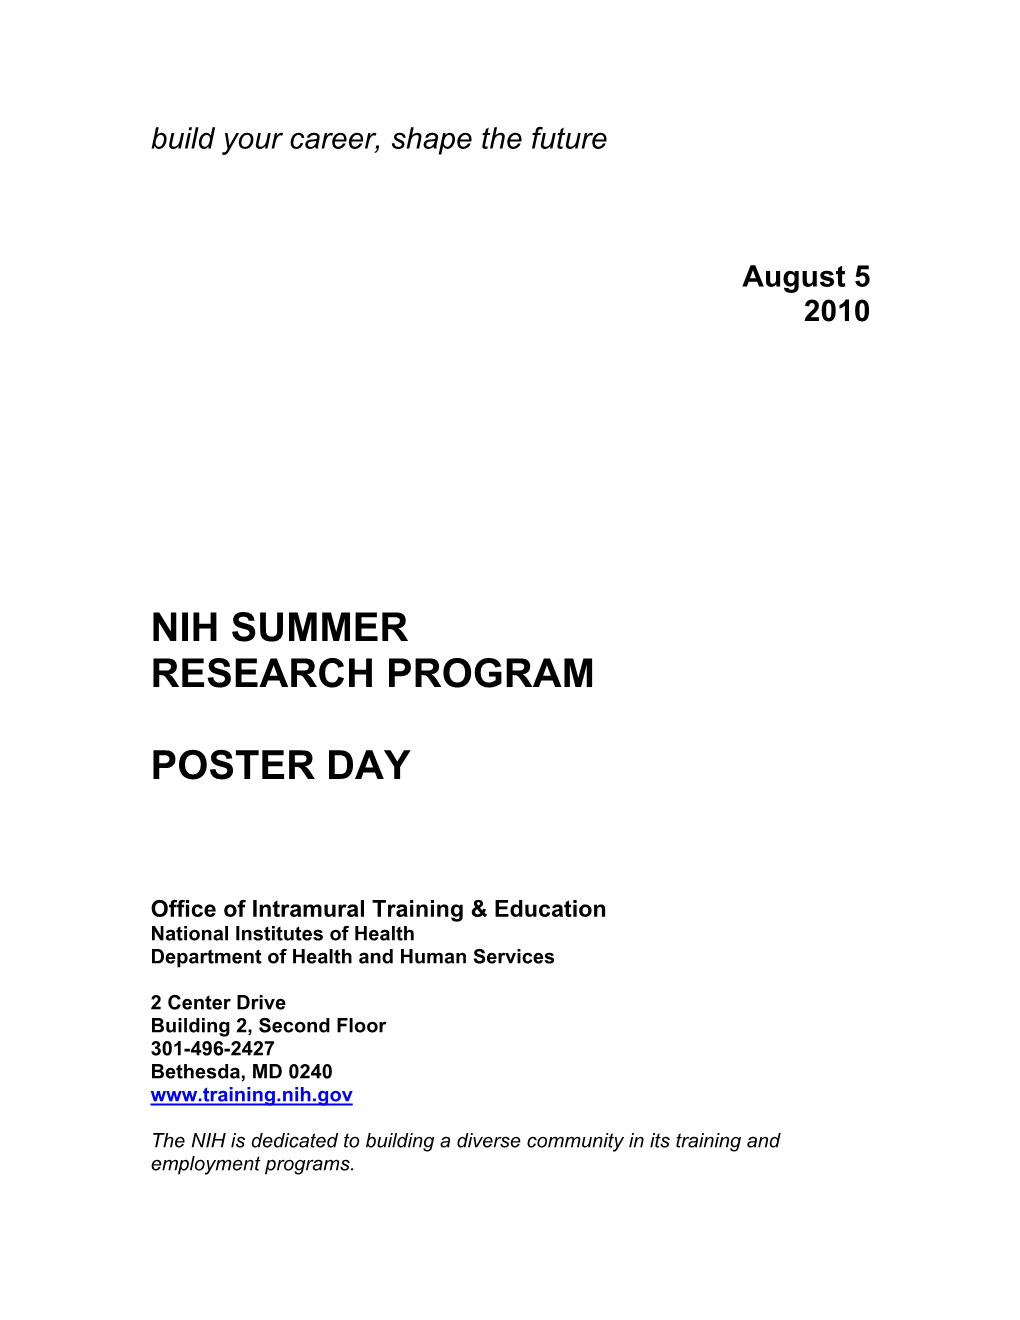 Nih Summer Research Program Poster